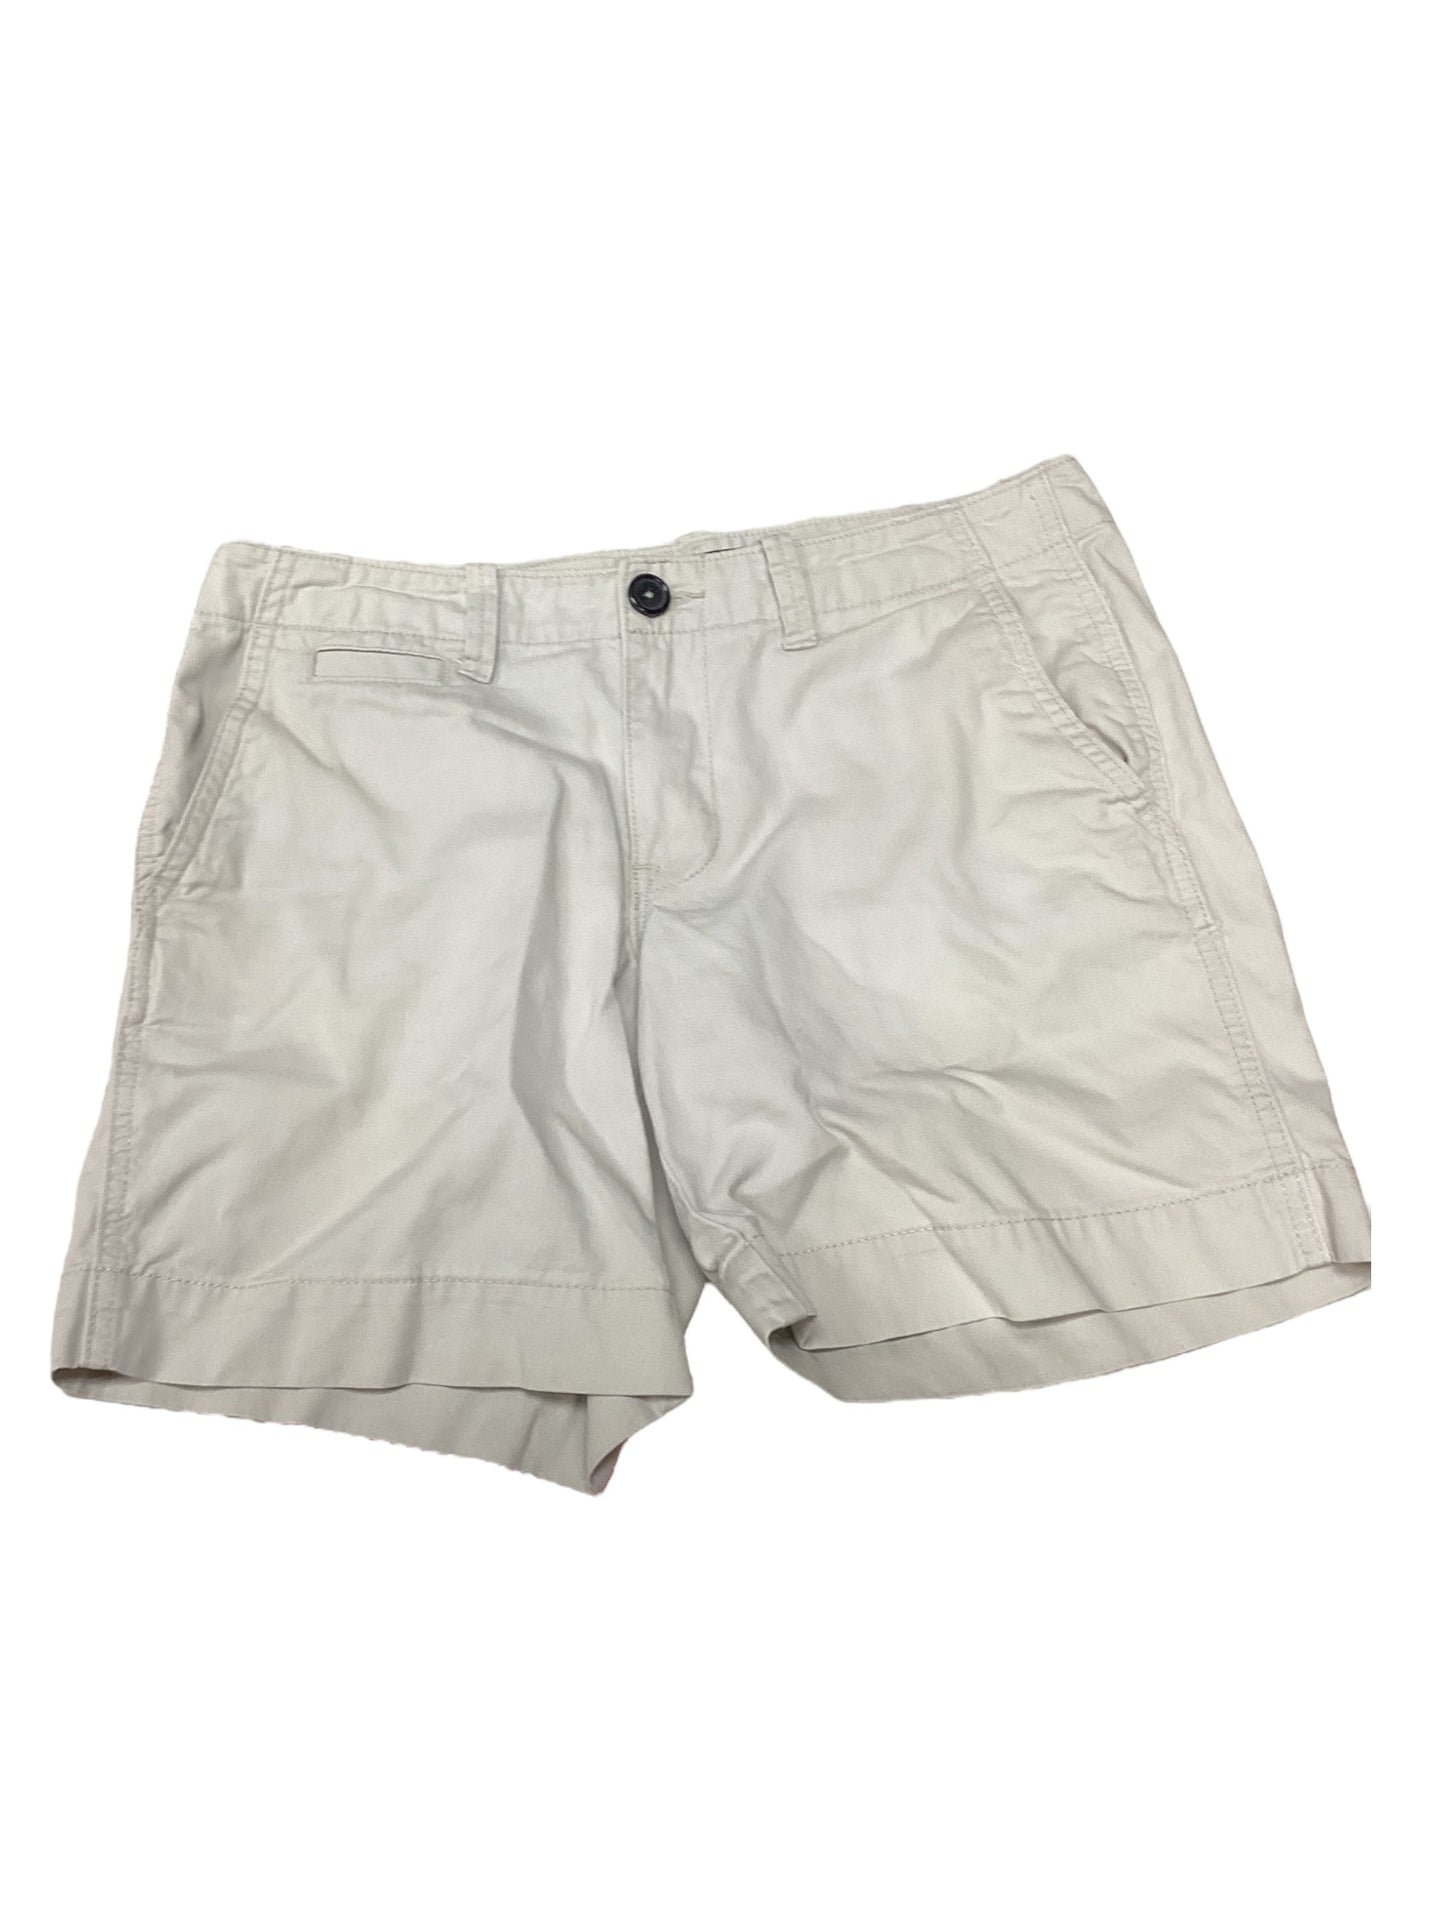 Tan Shorts Ralph Lauren, Size 4